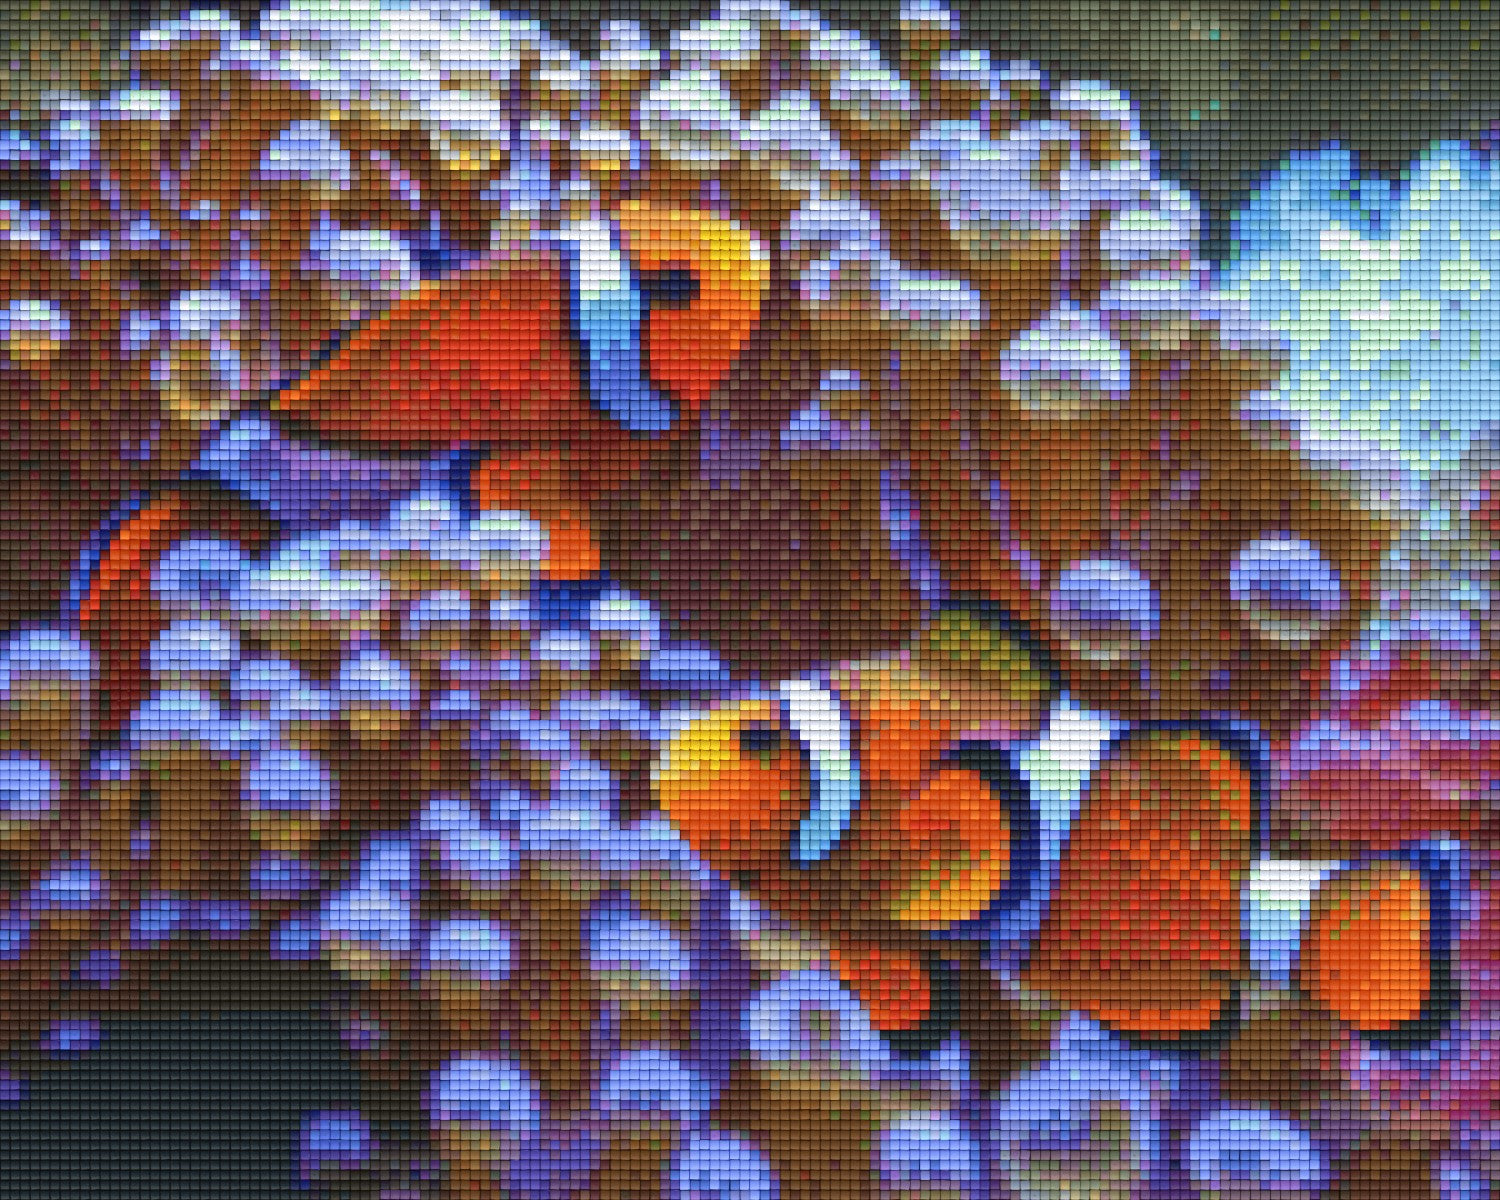 Pixelhobby Klassik Set - Clownfische